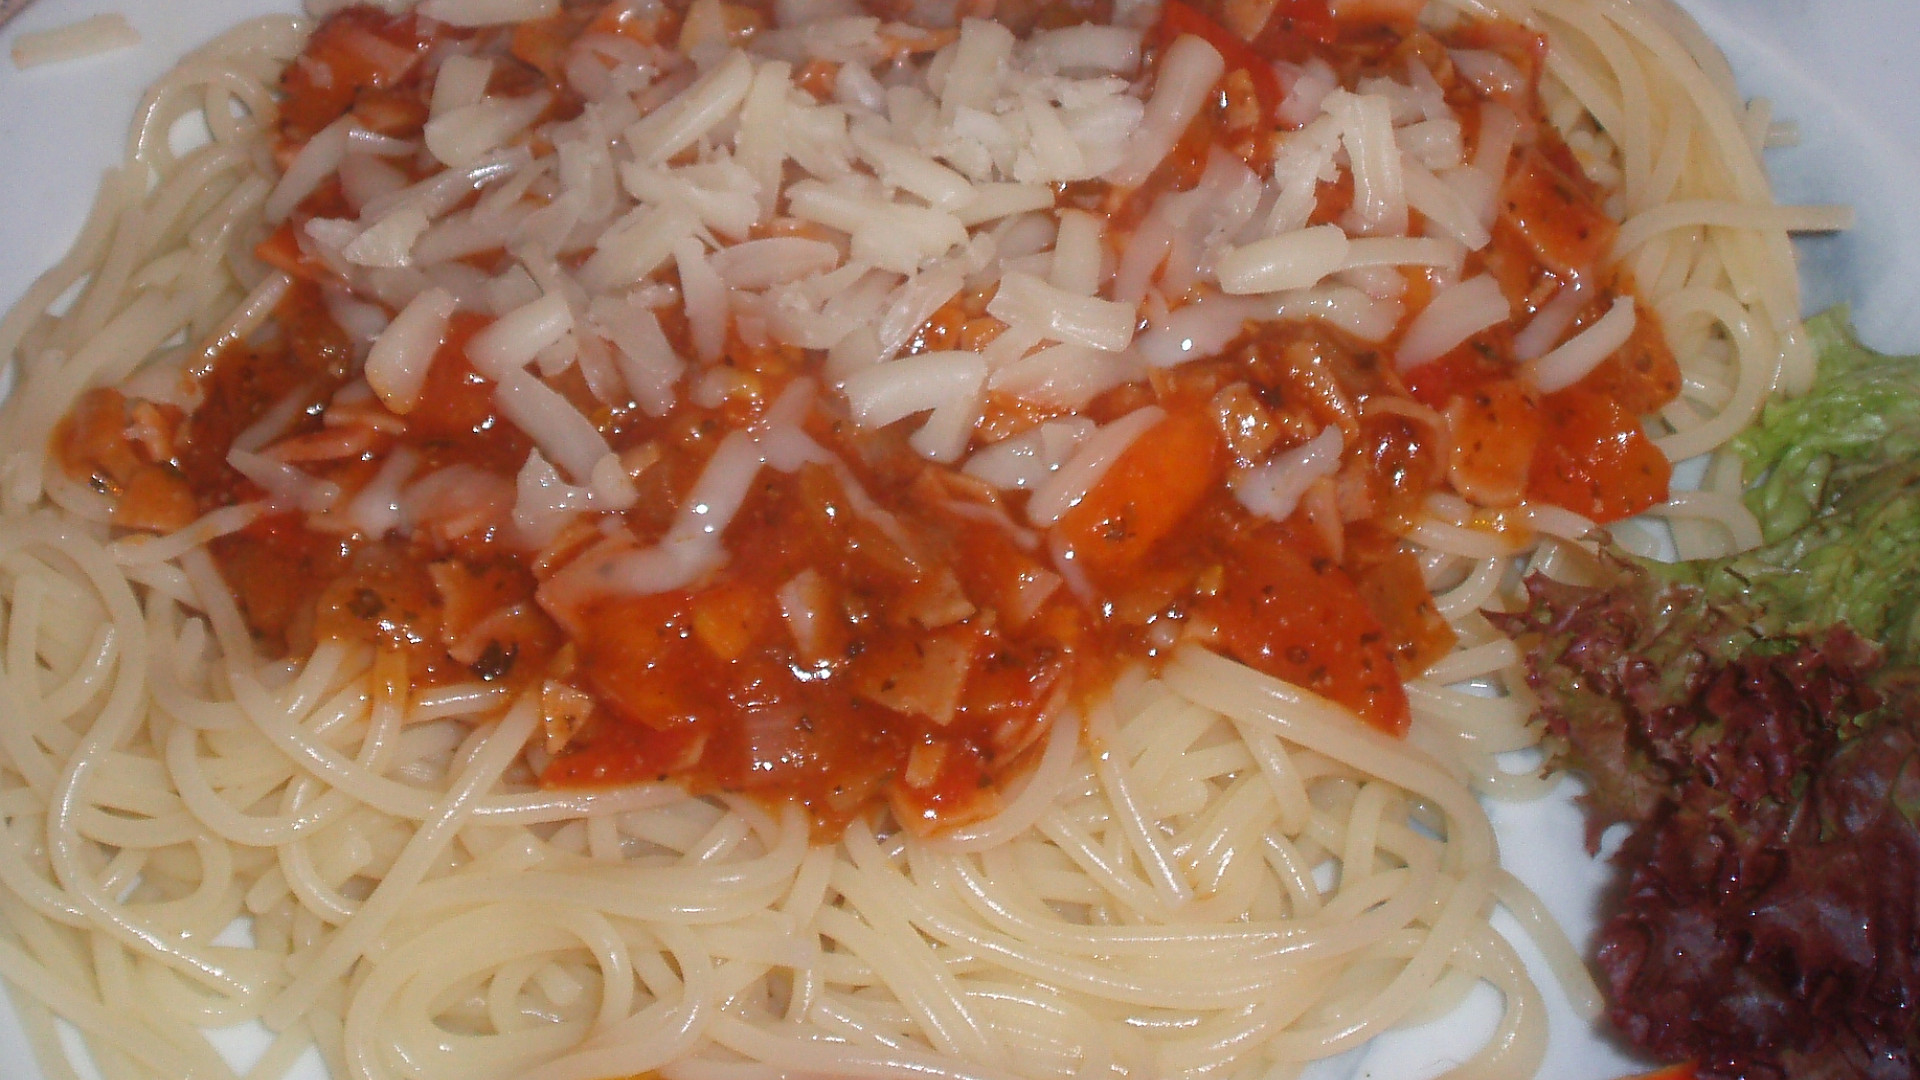 Les pates de la minute- Minutkové špagety